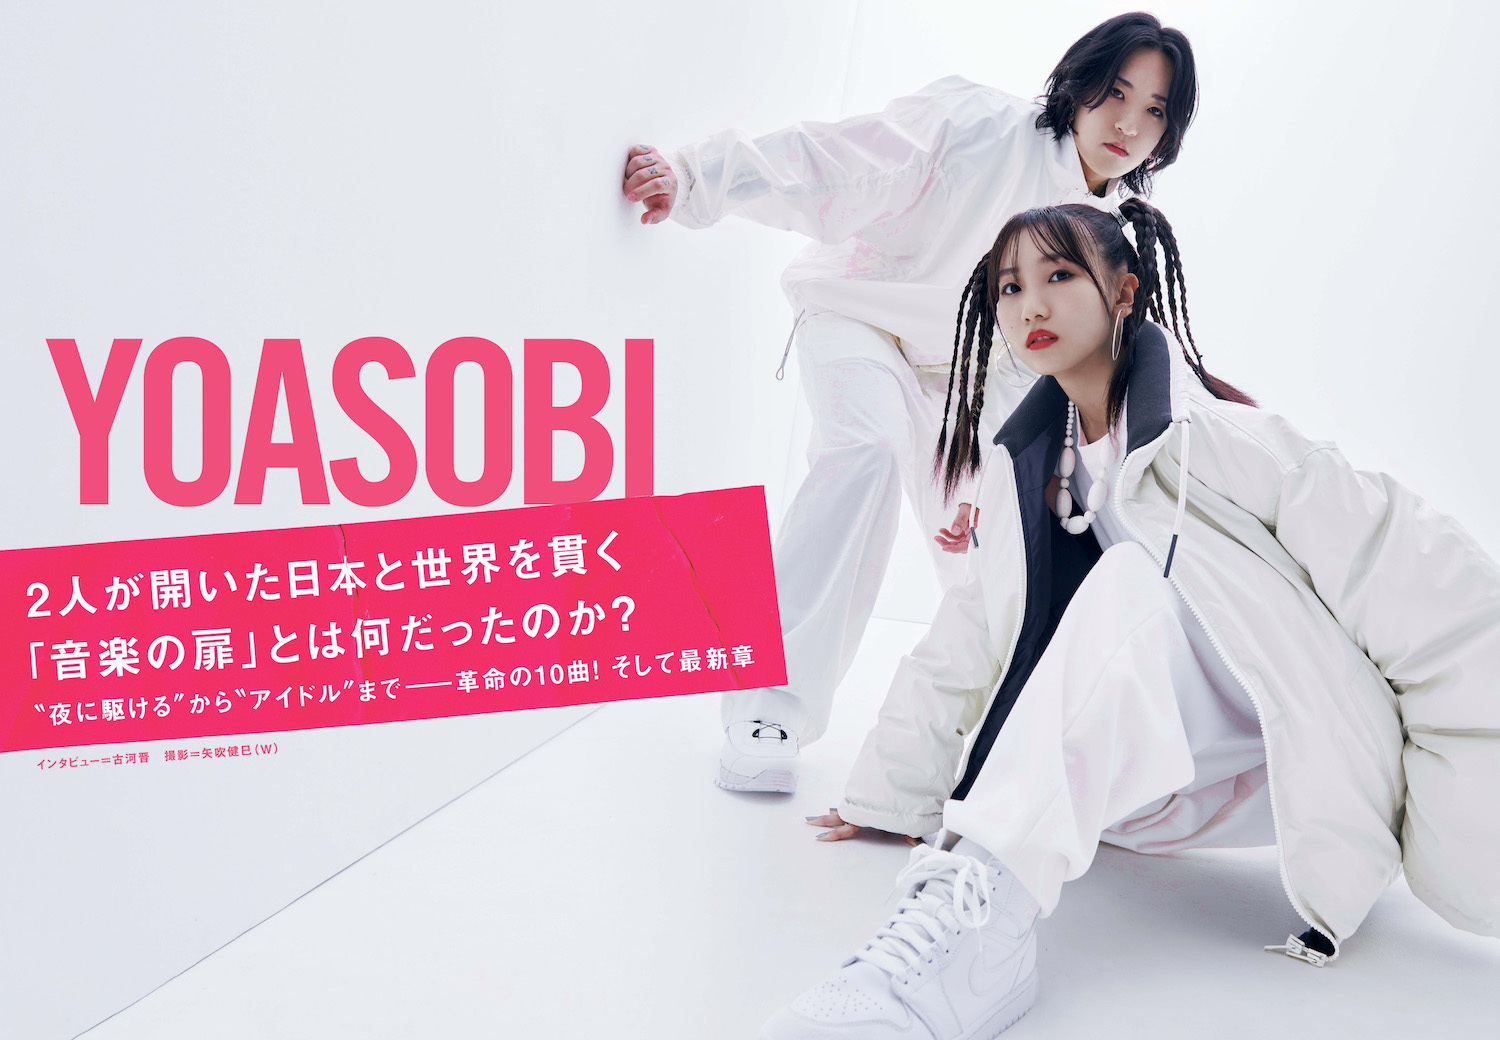 JAPAN最新号】YOASOBI、2人が開いた日本と世界を貫く「音楽の扉」とは